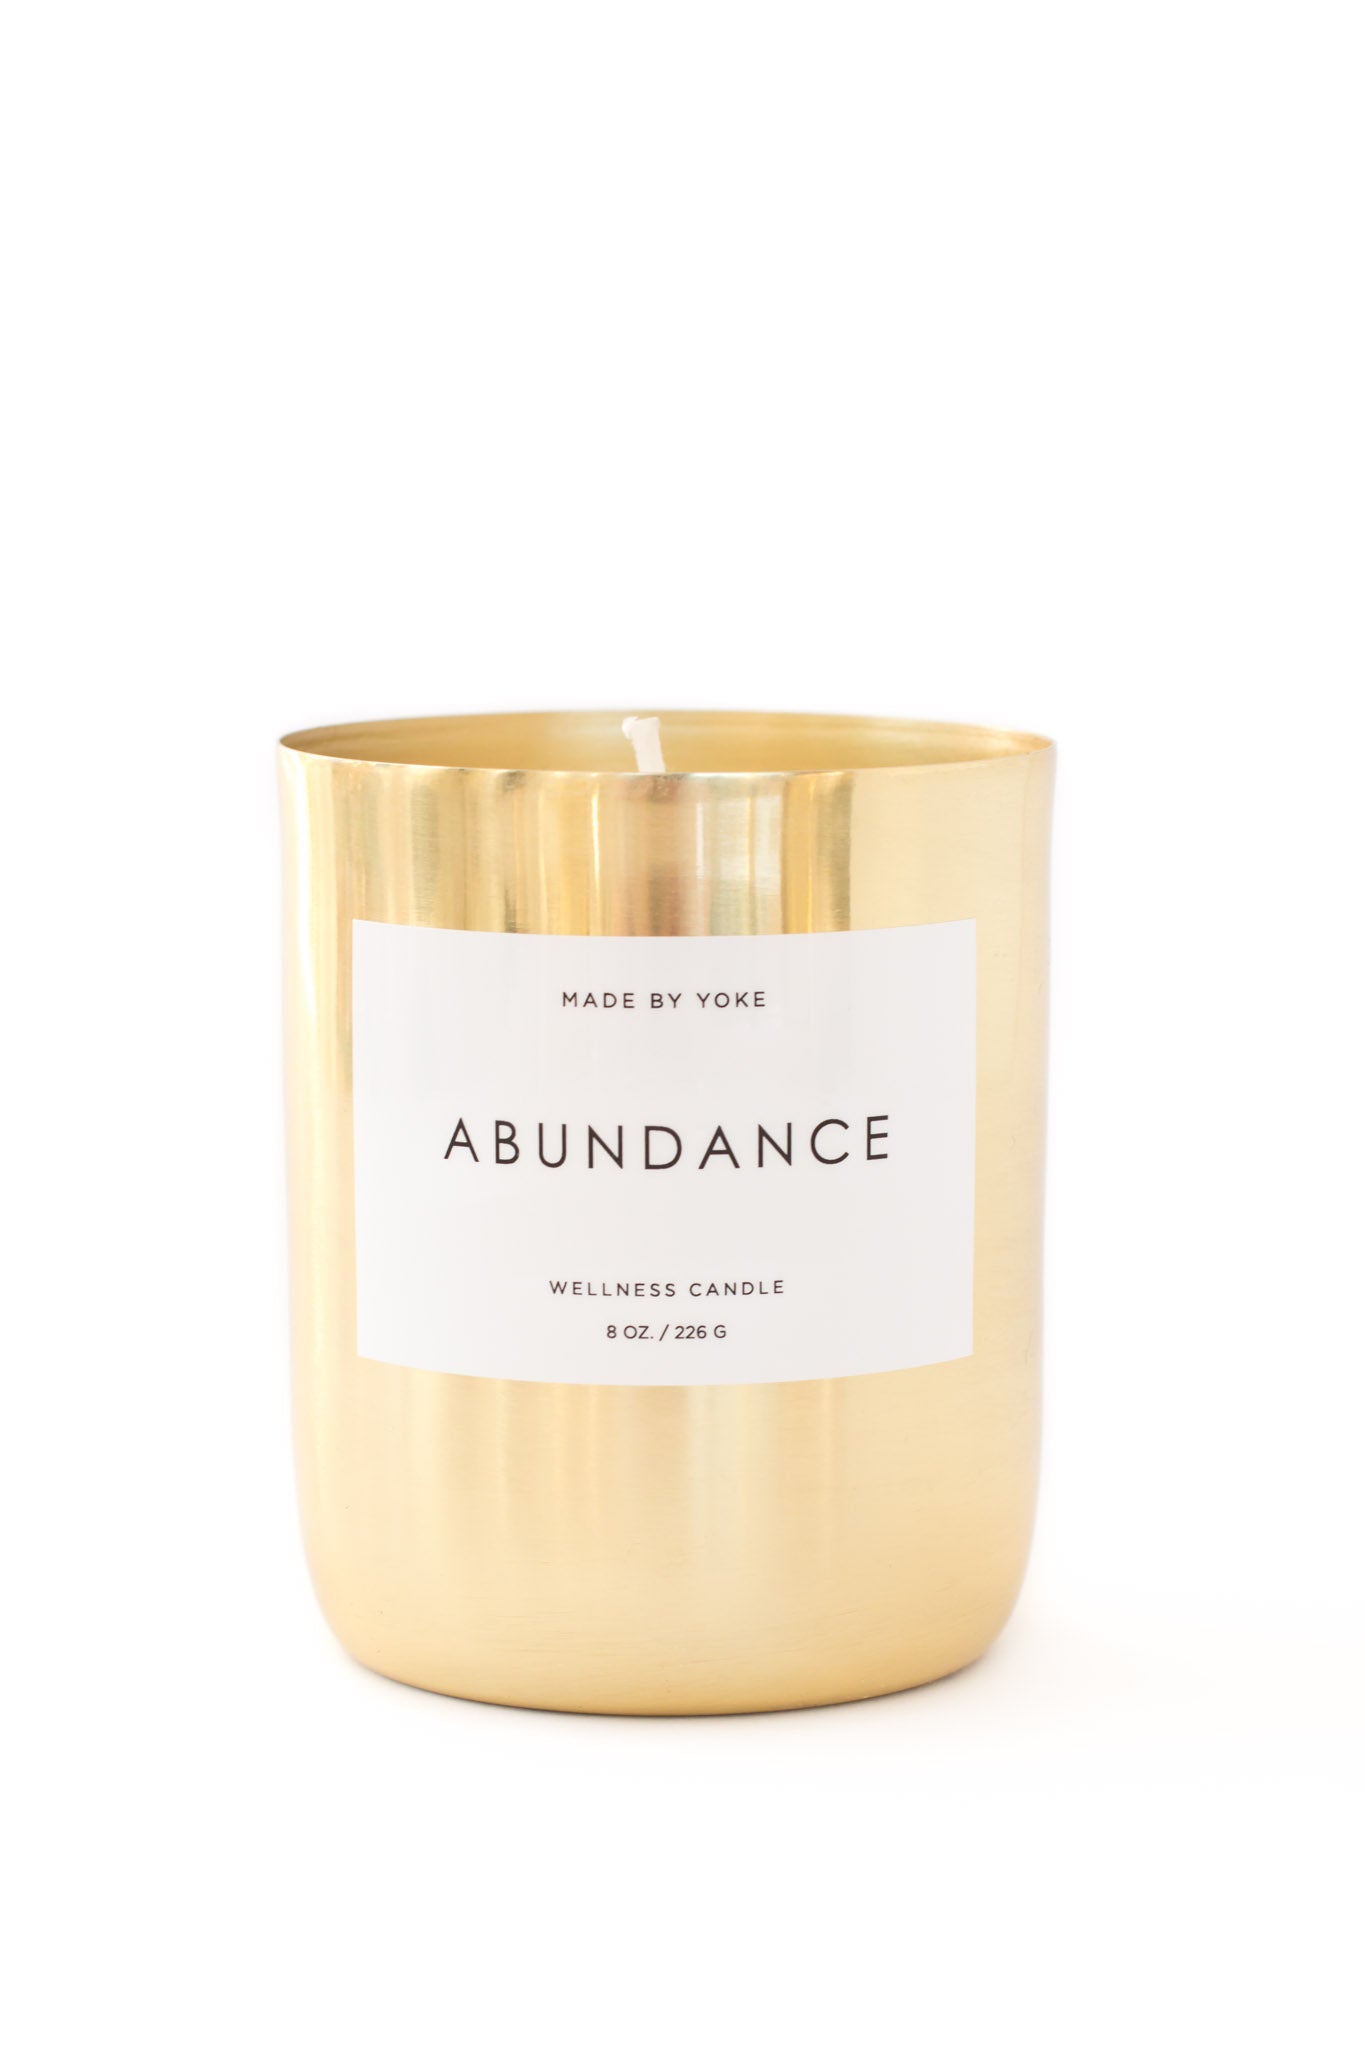 Made by Yoke Gold Abundance Wellness Candle Gathered Home